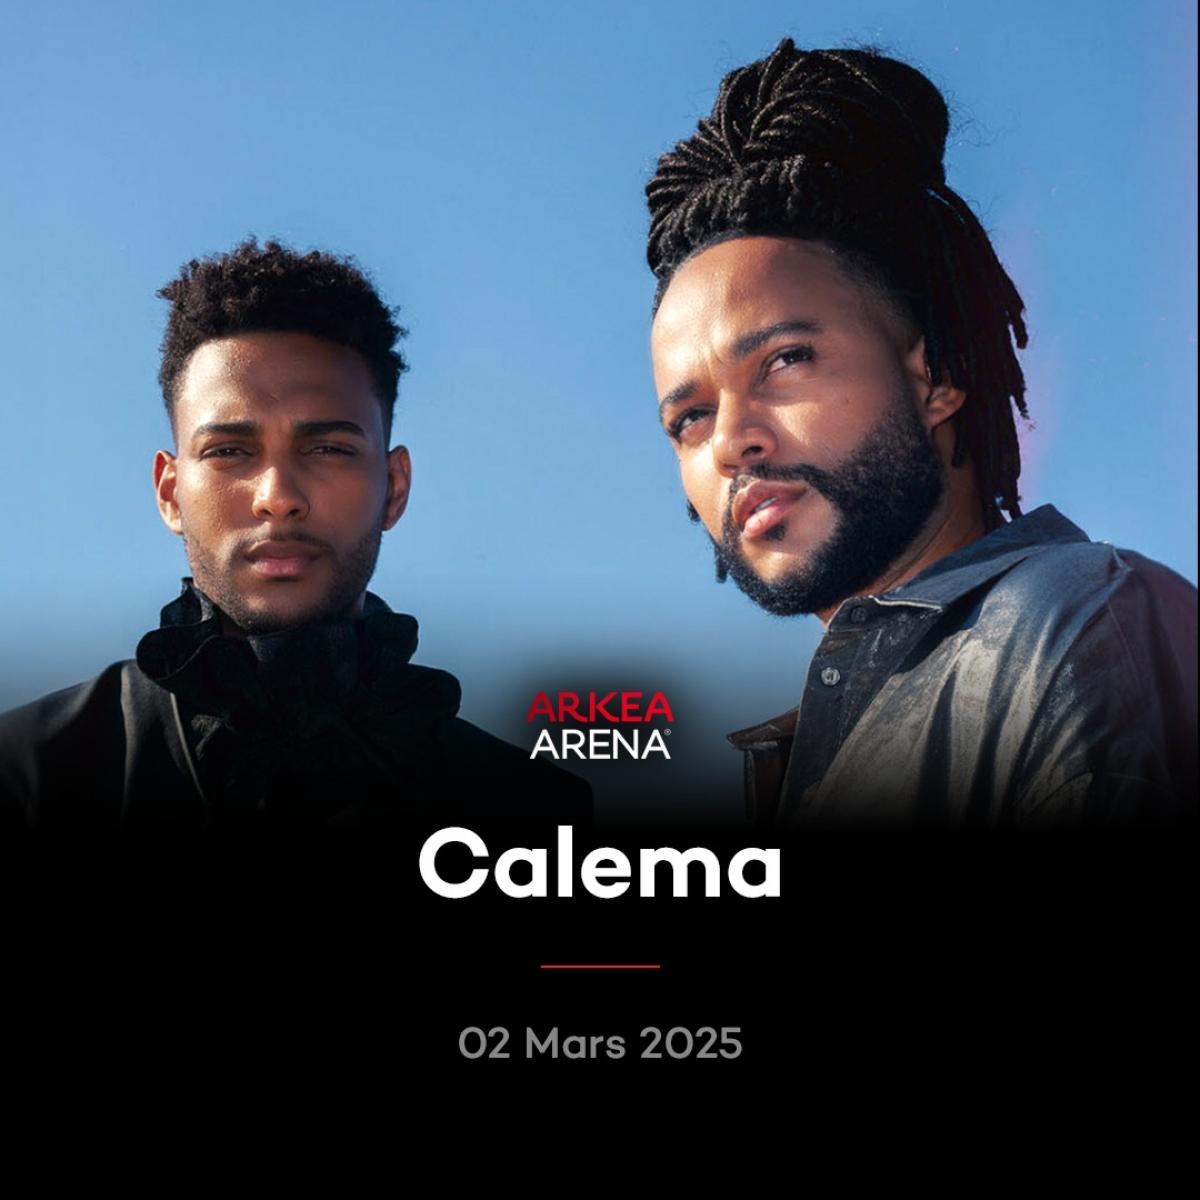 Calema in der Arkea Arena Tickets